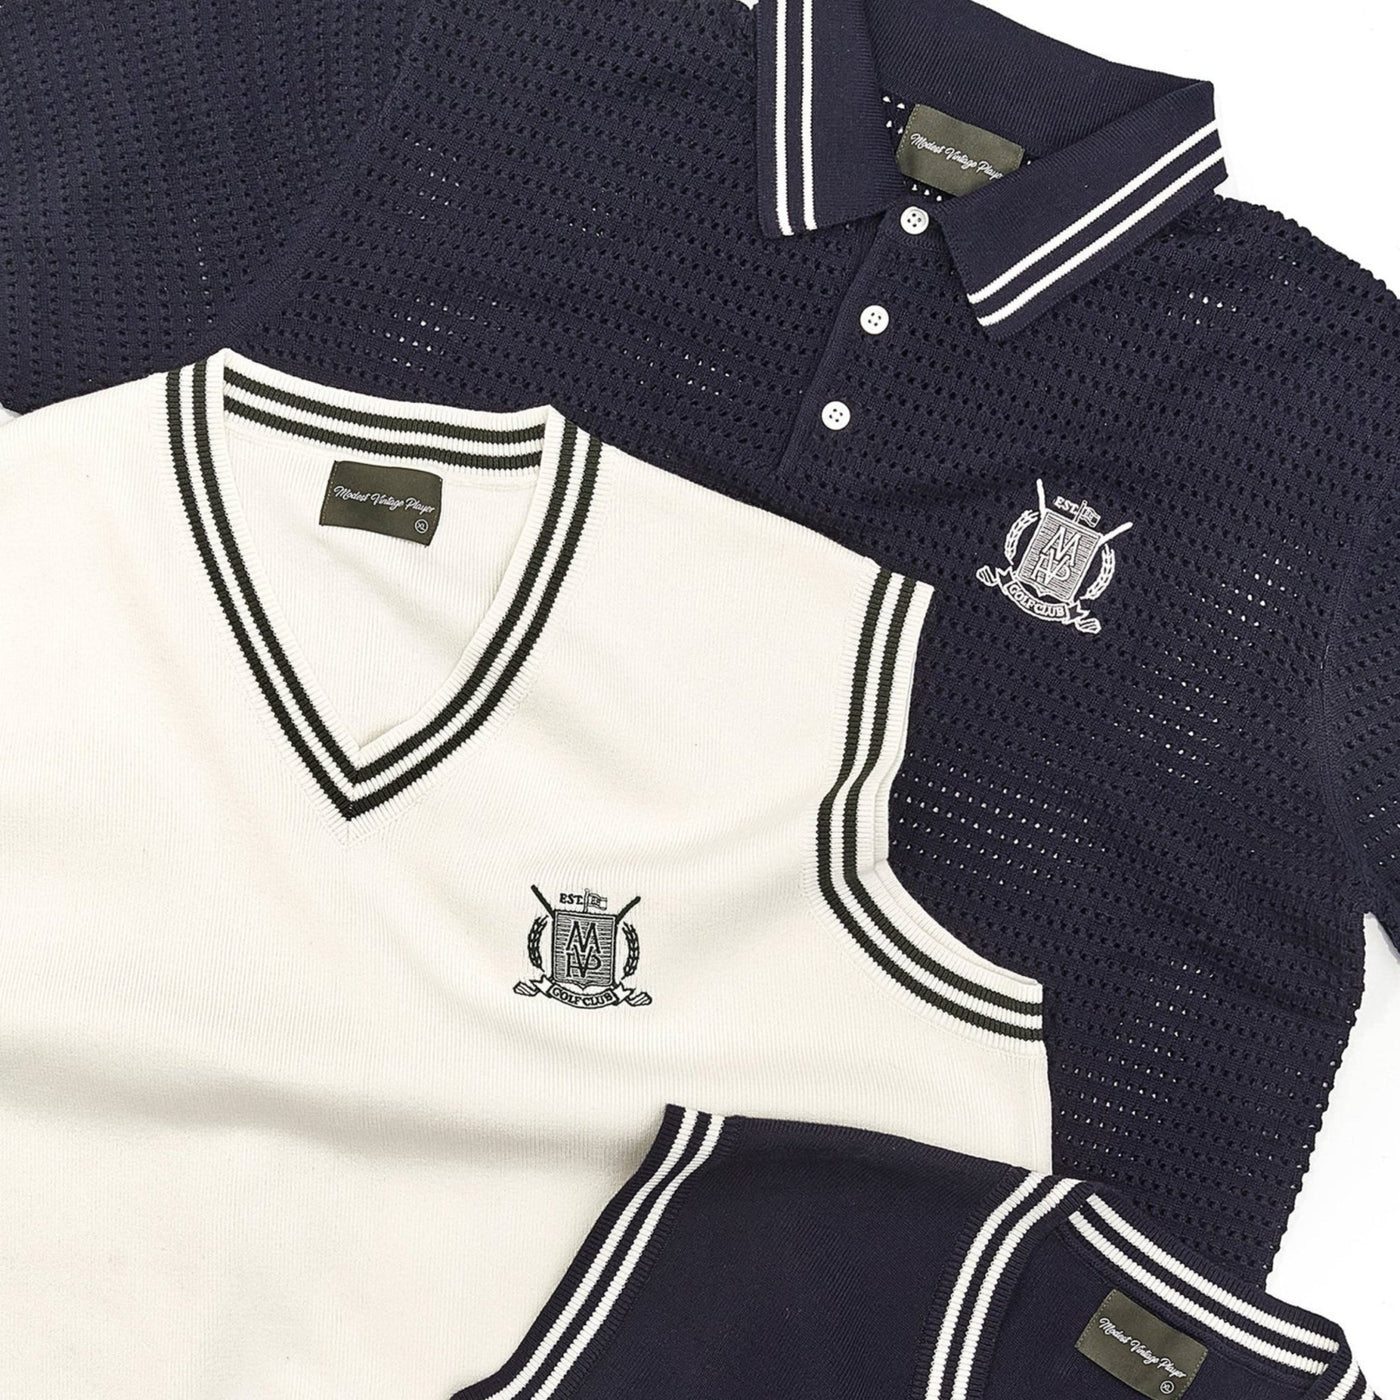 MVP Golf Club Polo Shirt - Navy Knit - MODEST VINTAGE PLAYER LTD